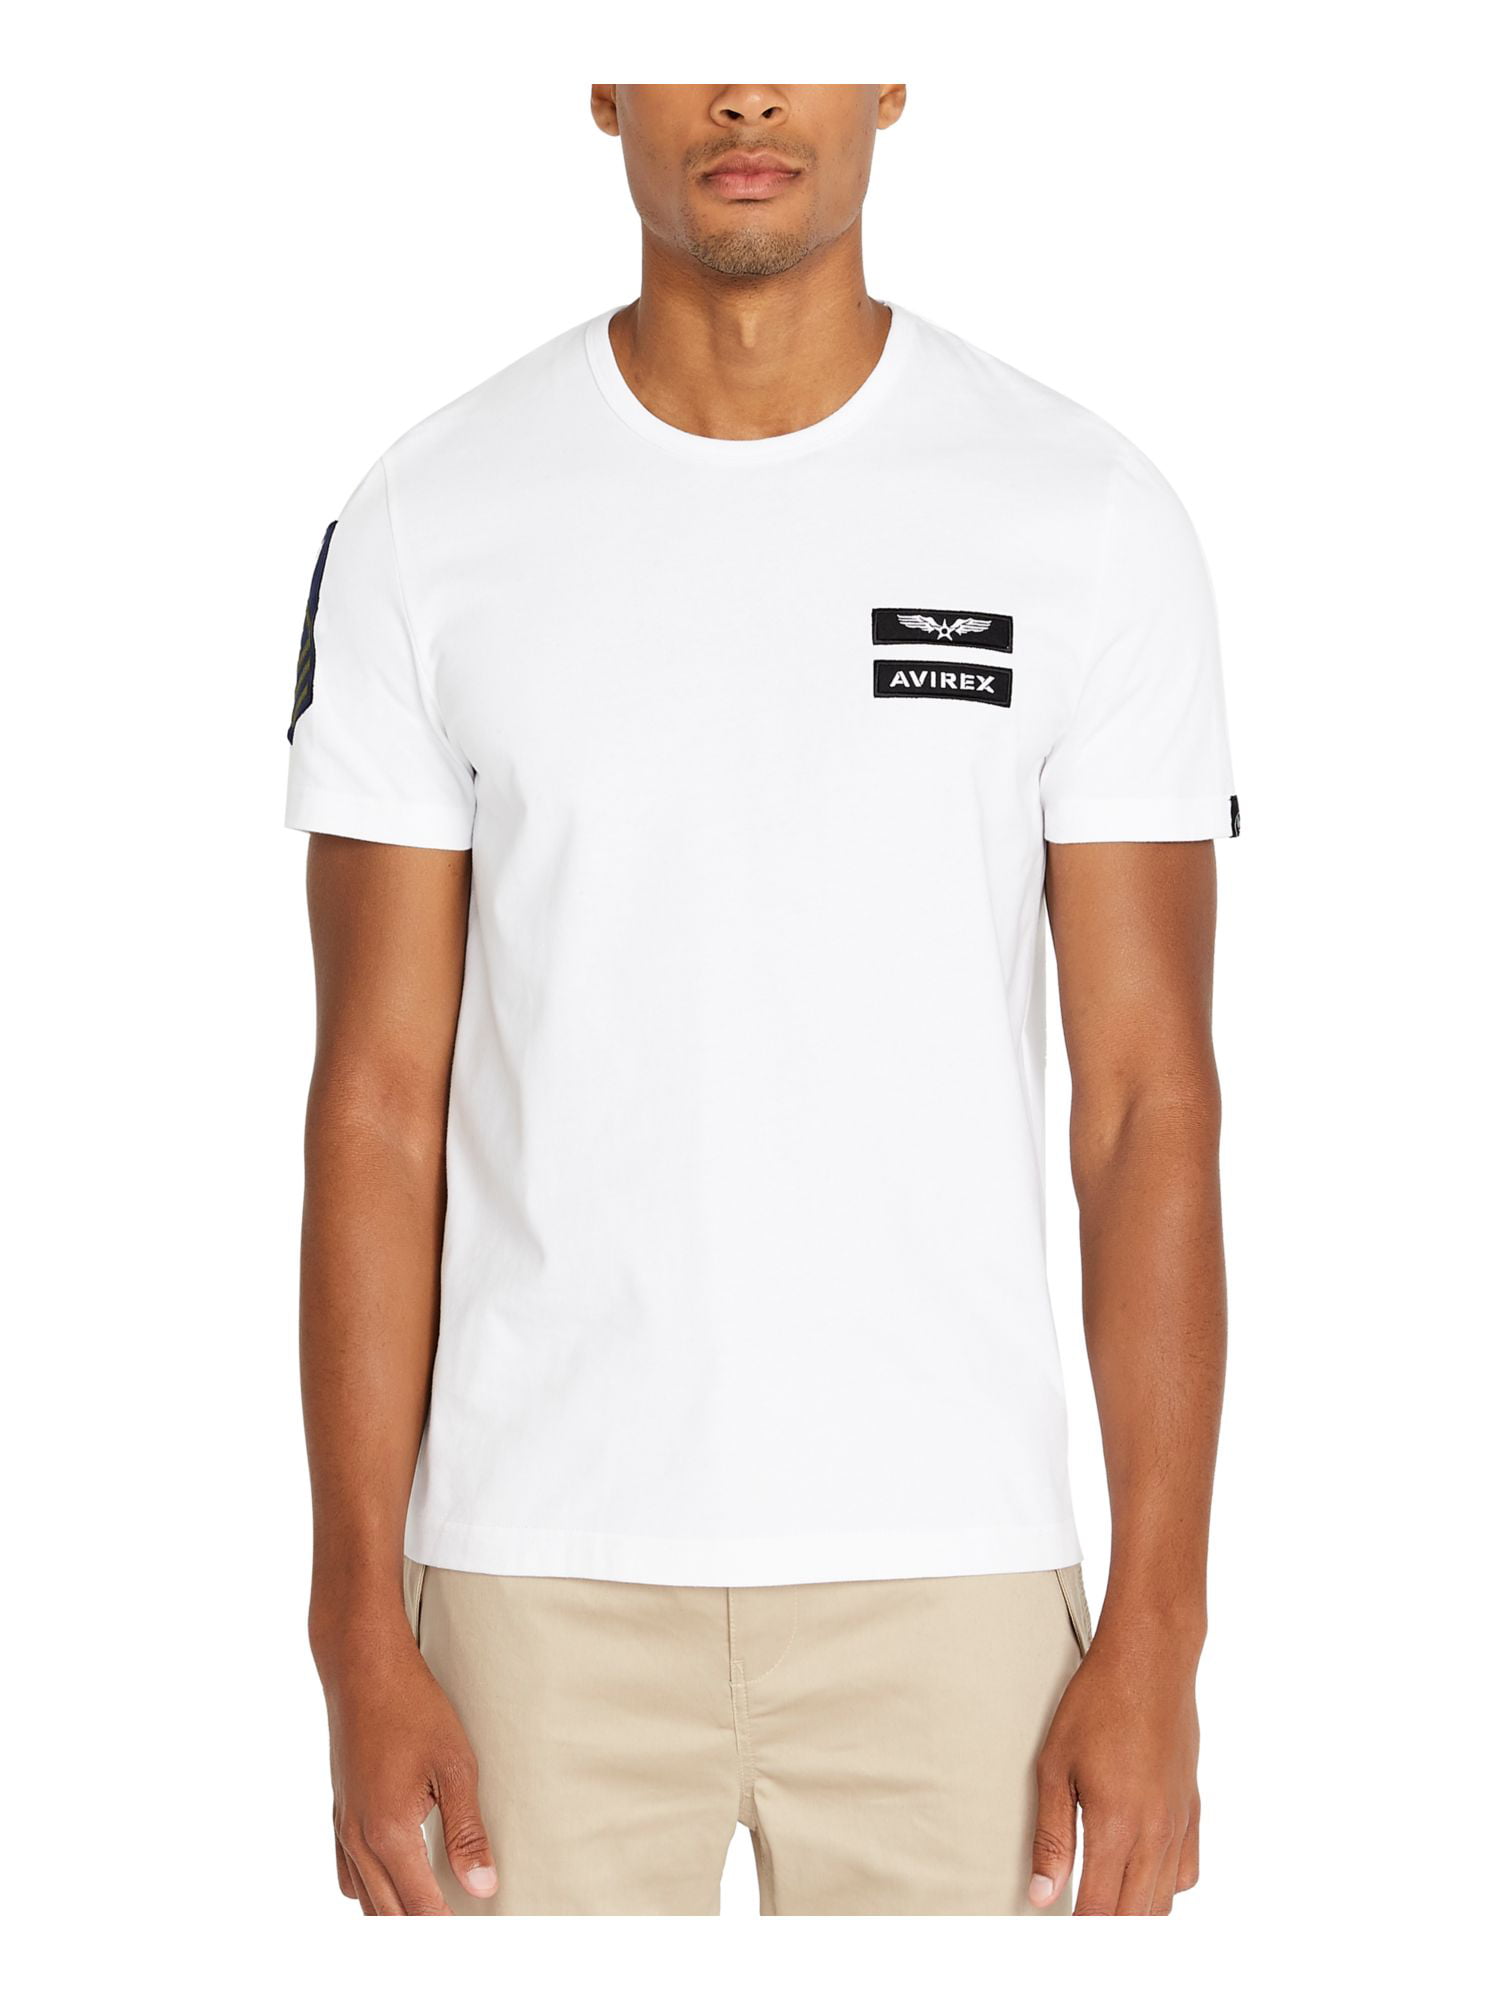 AVIREX Mens White Graphic Short Sleeve T-Shirt L